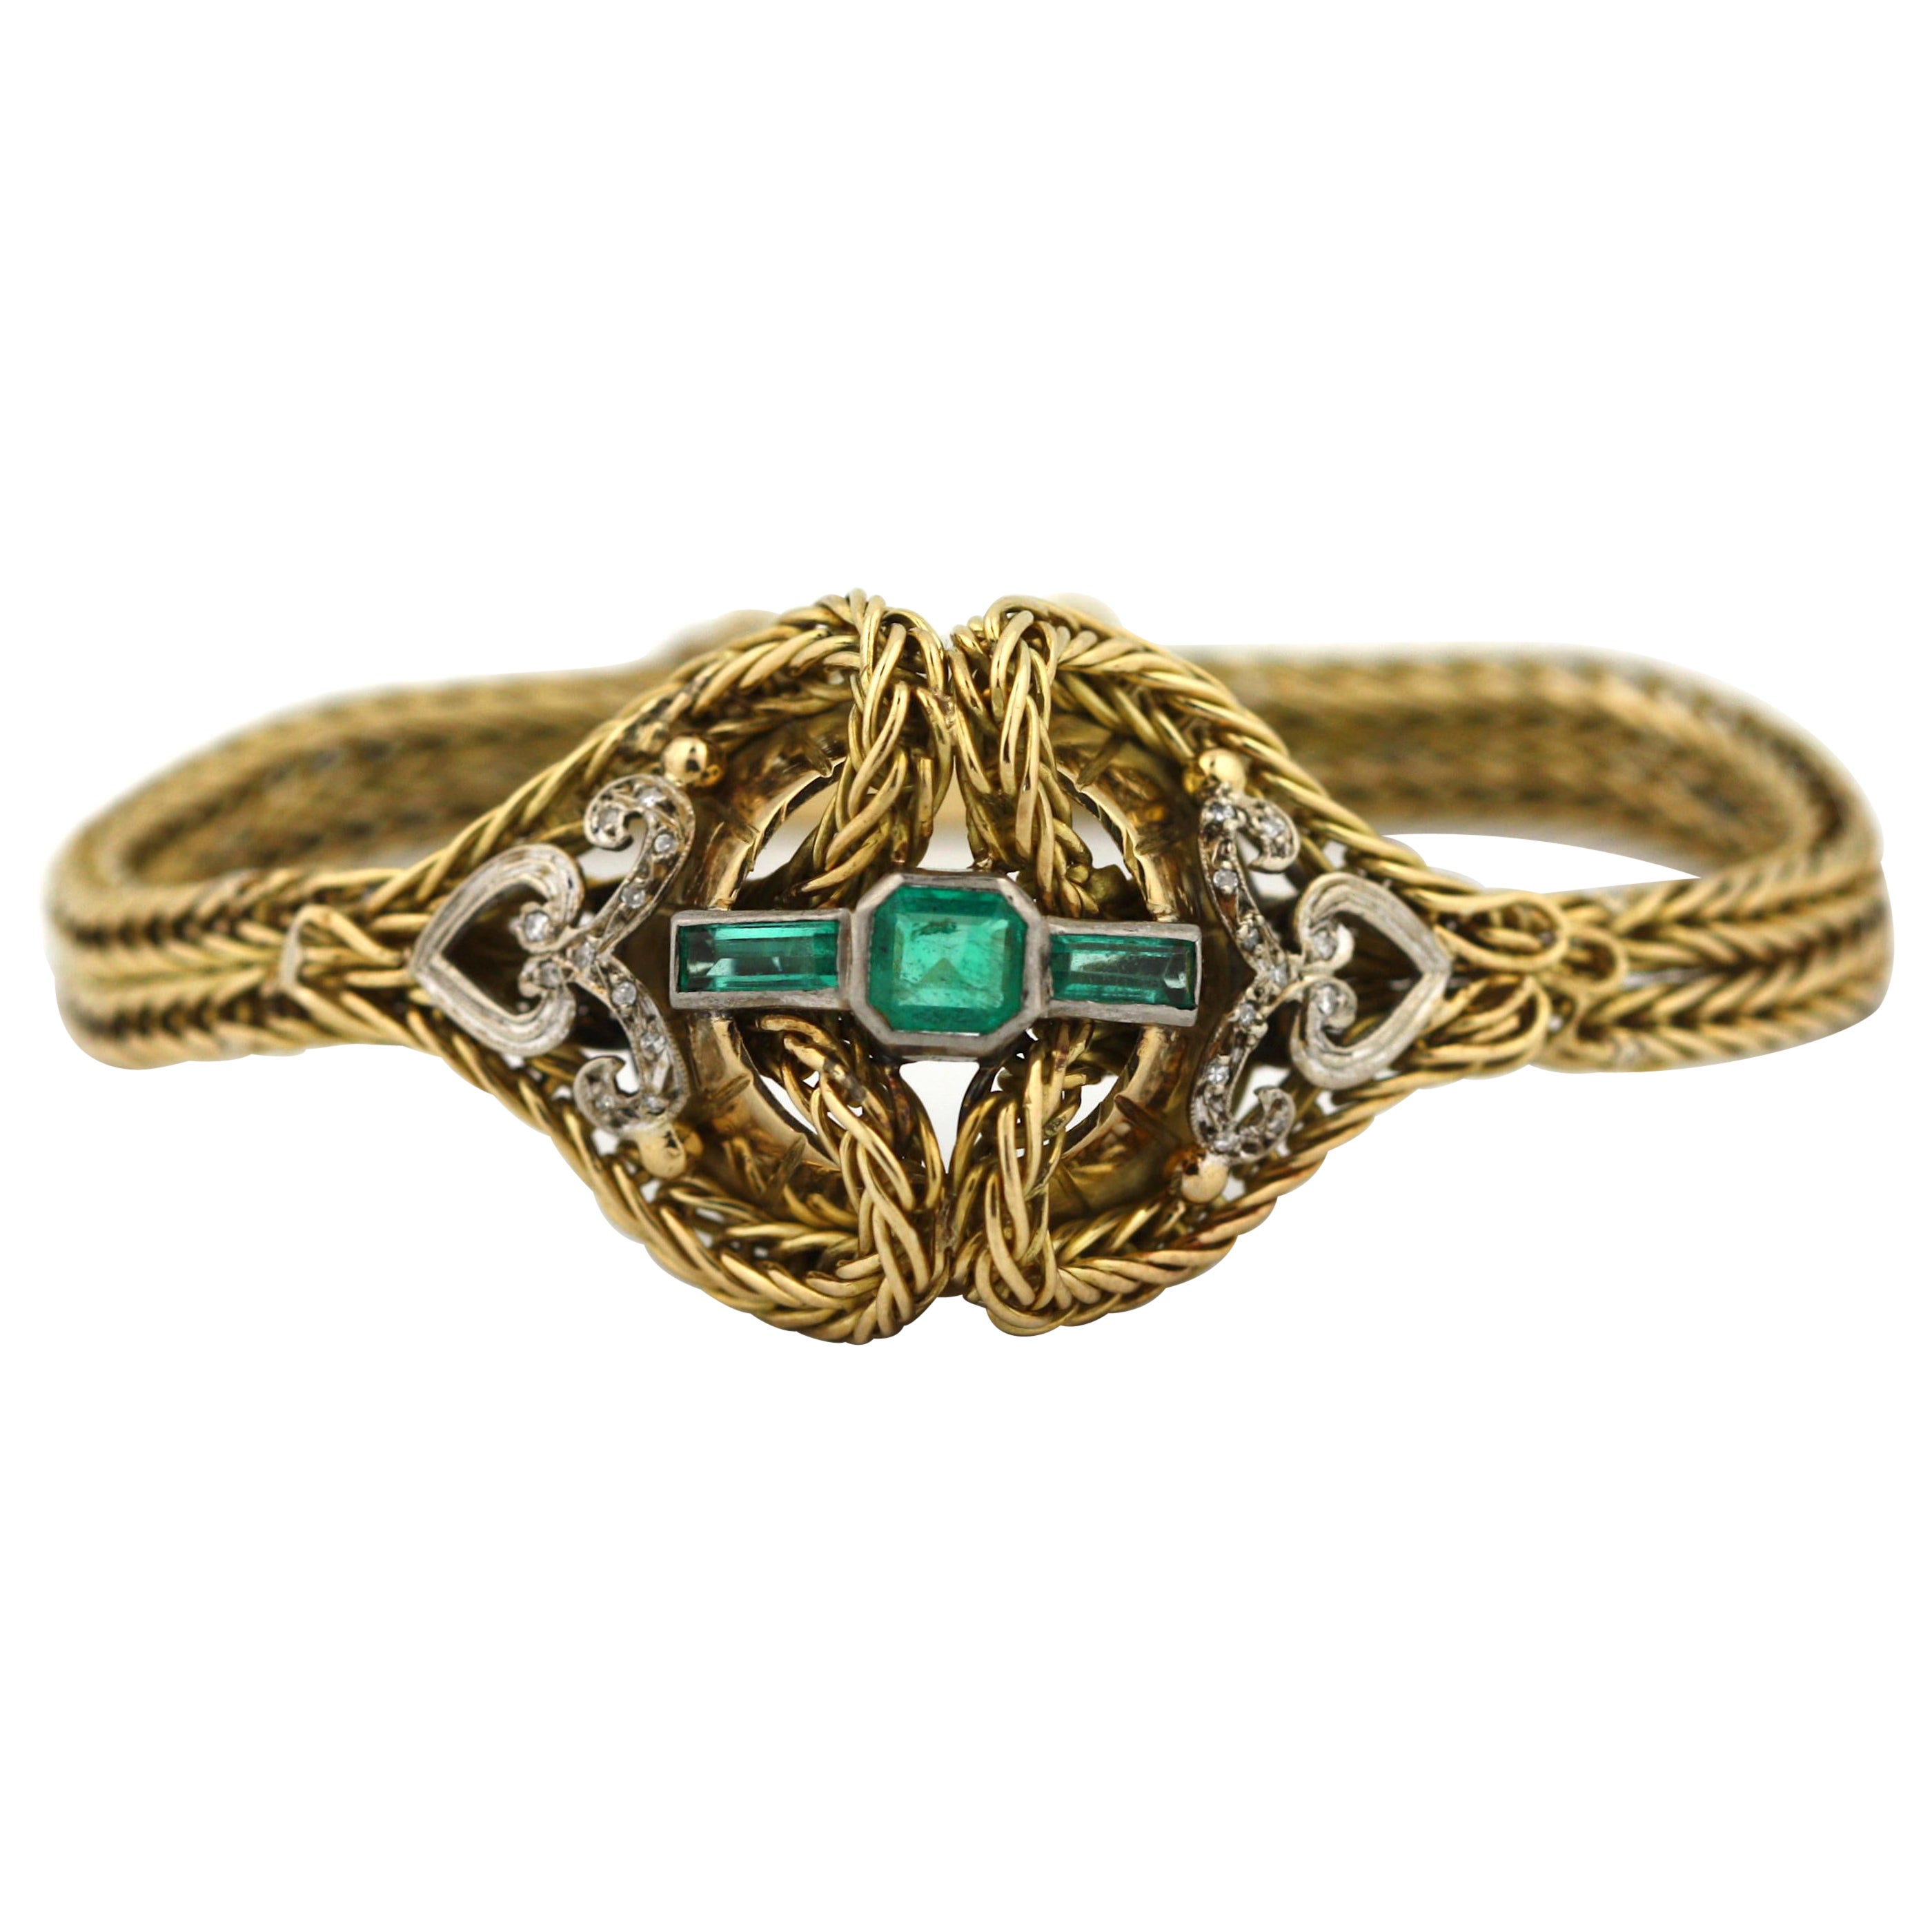  18 karat Gold, Colored Stone and Diamond Bracelet